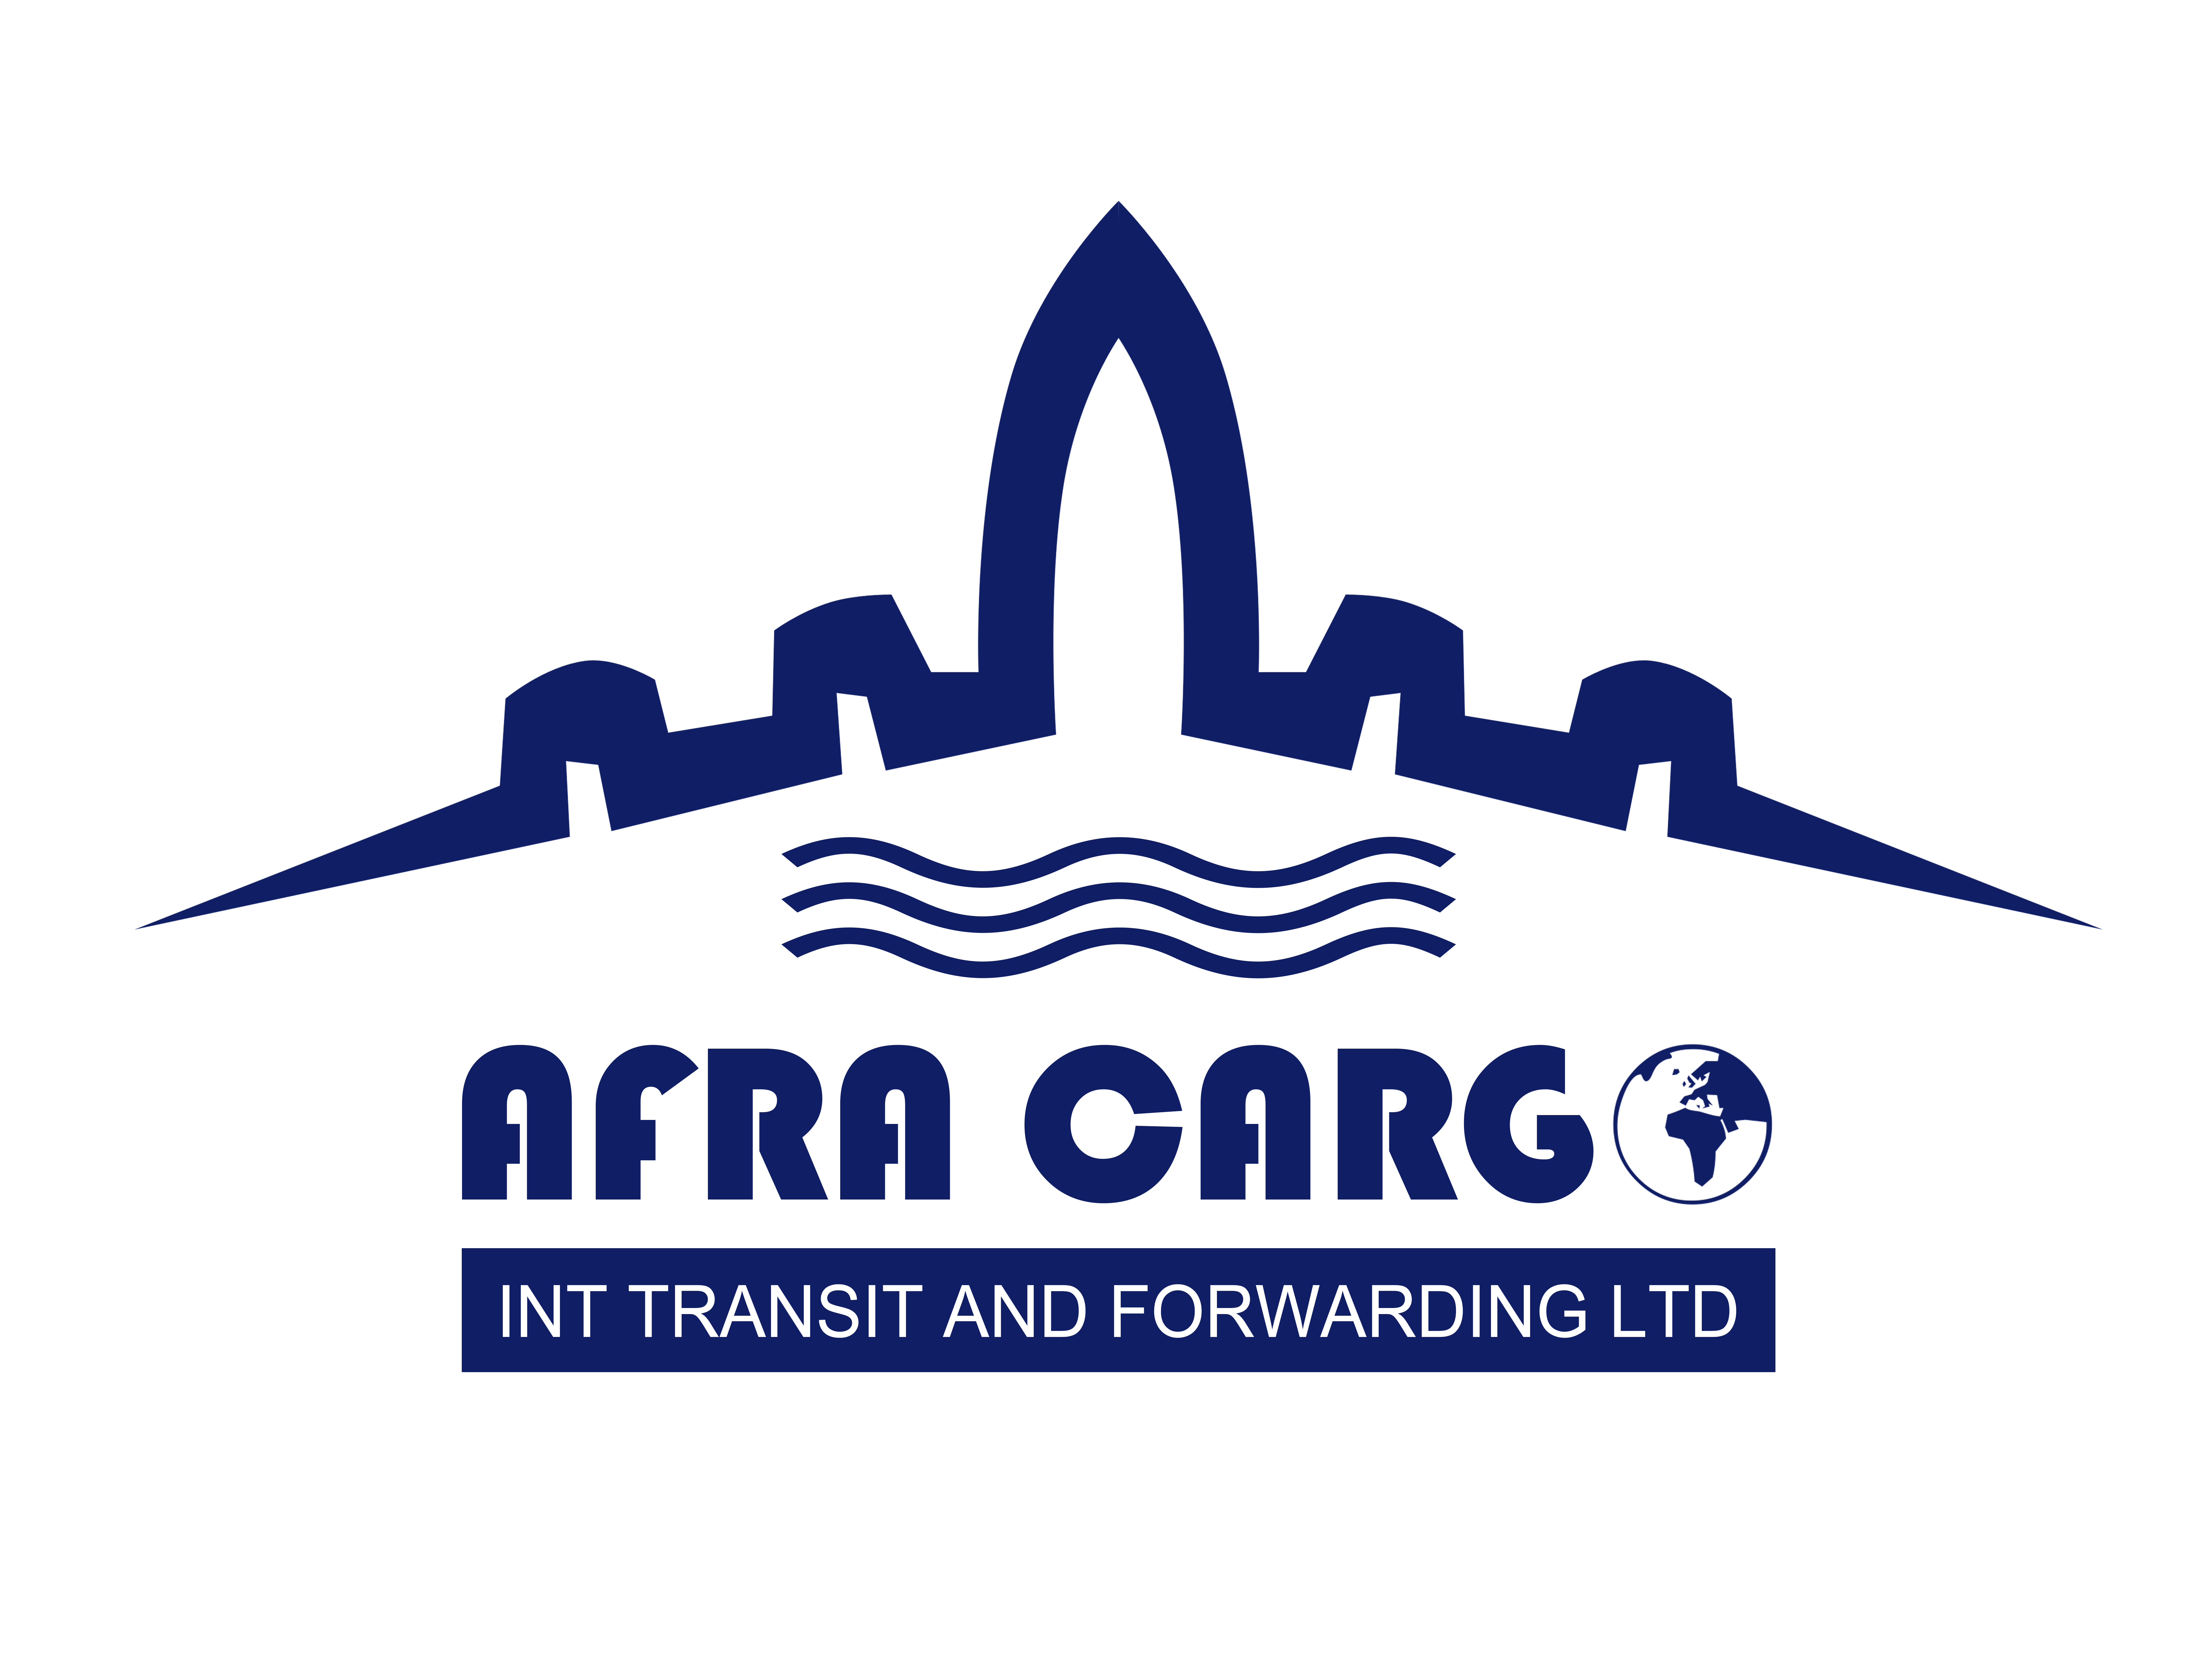 Afra Cargo